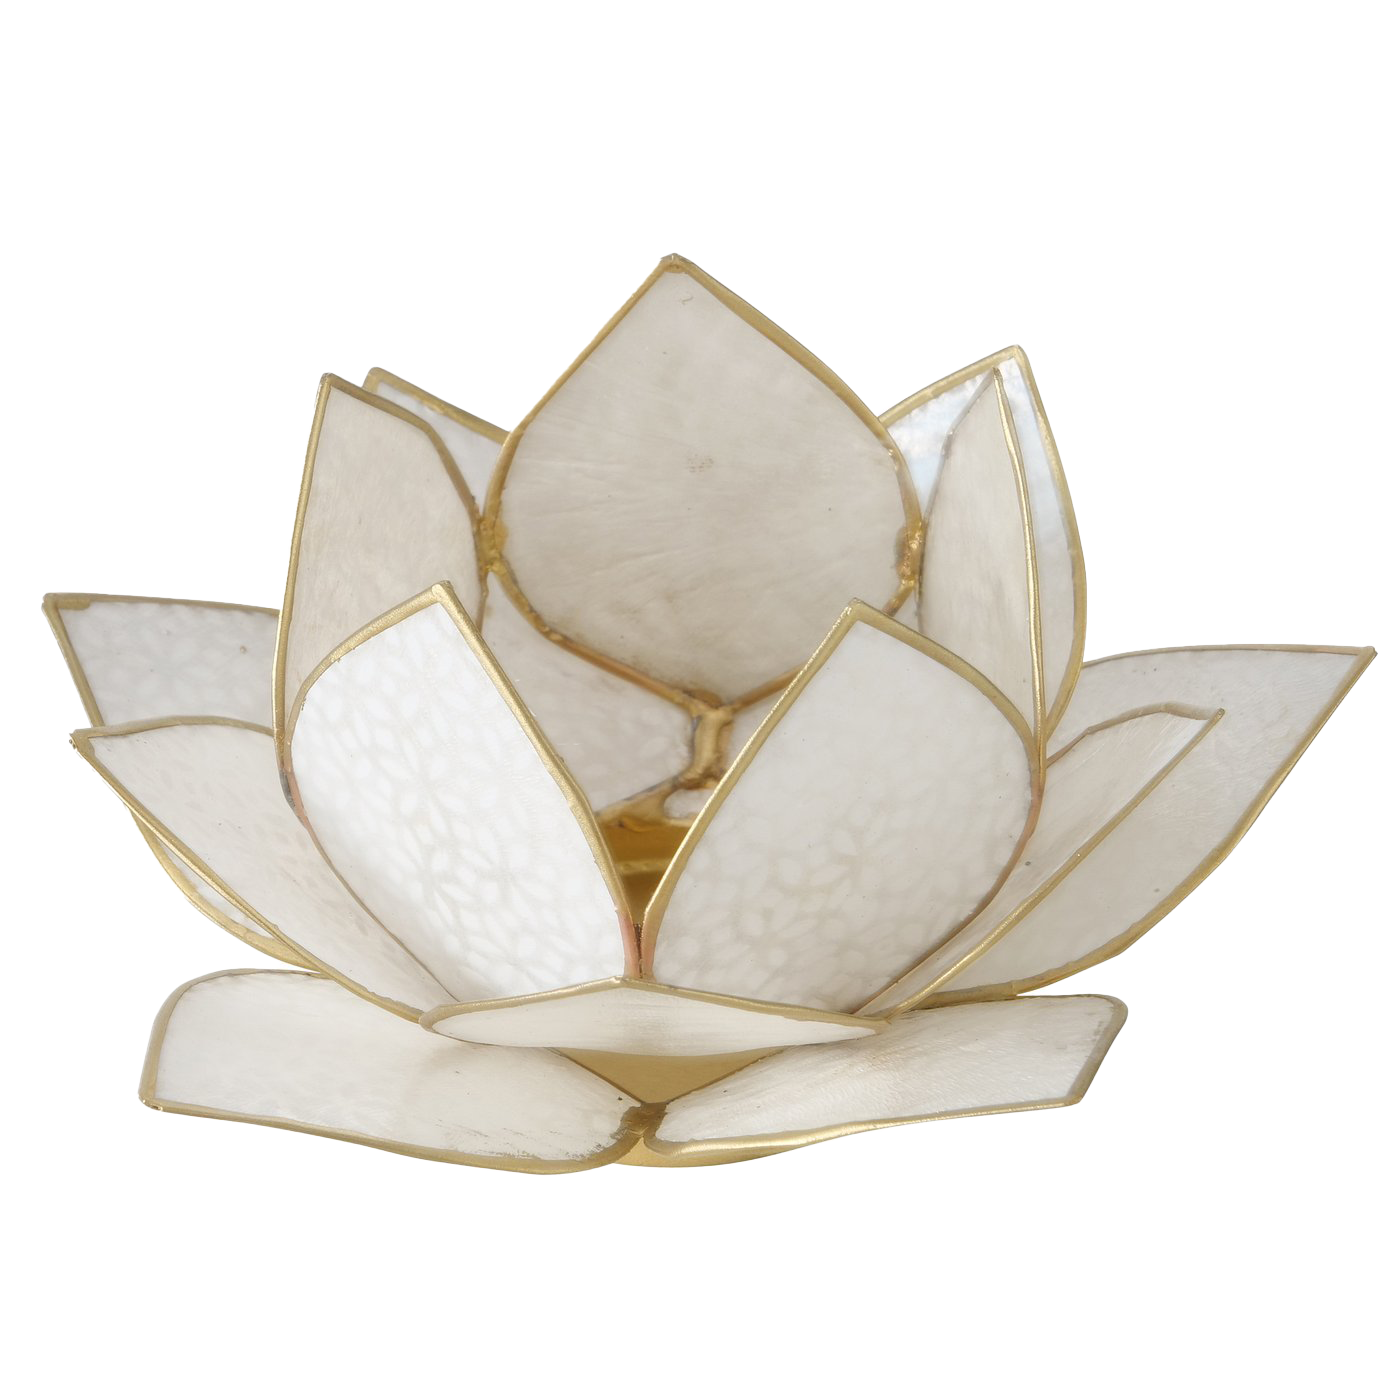 Lotusbloem waxinelicht houder offwhite met design